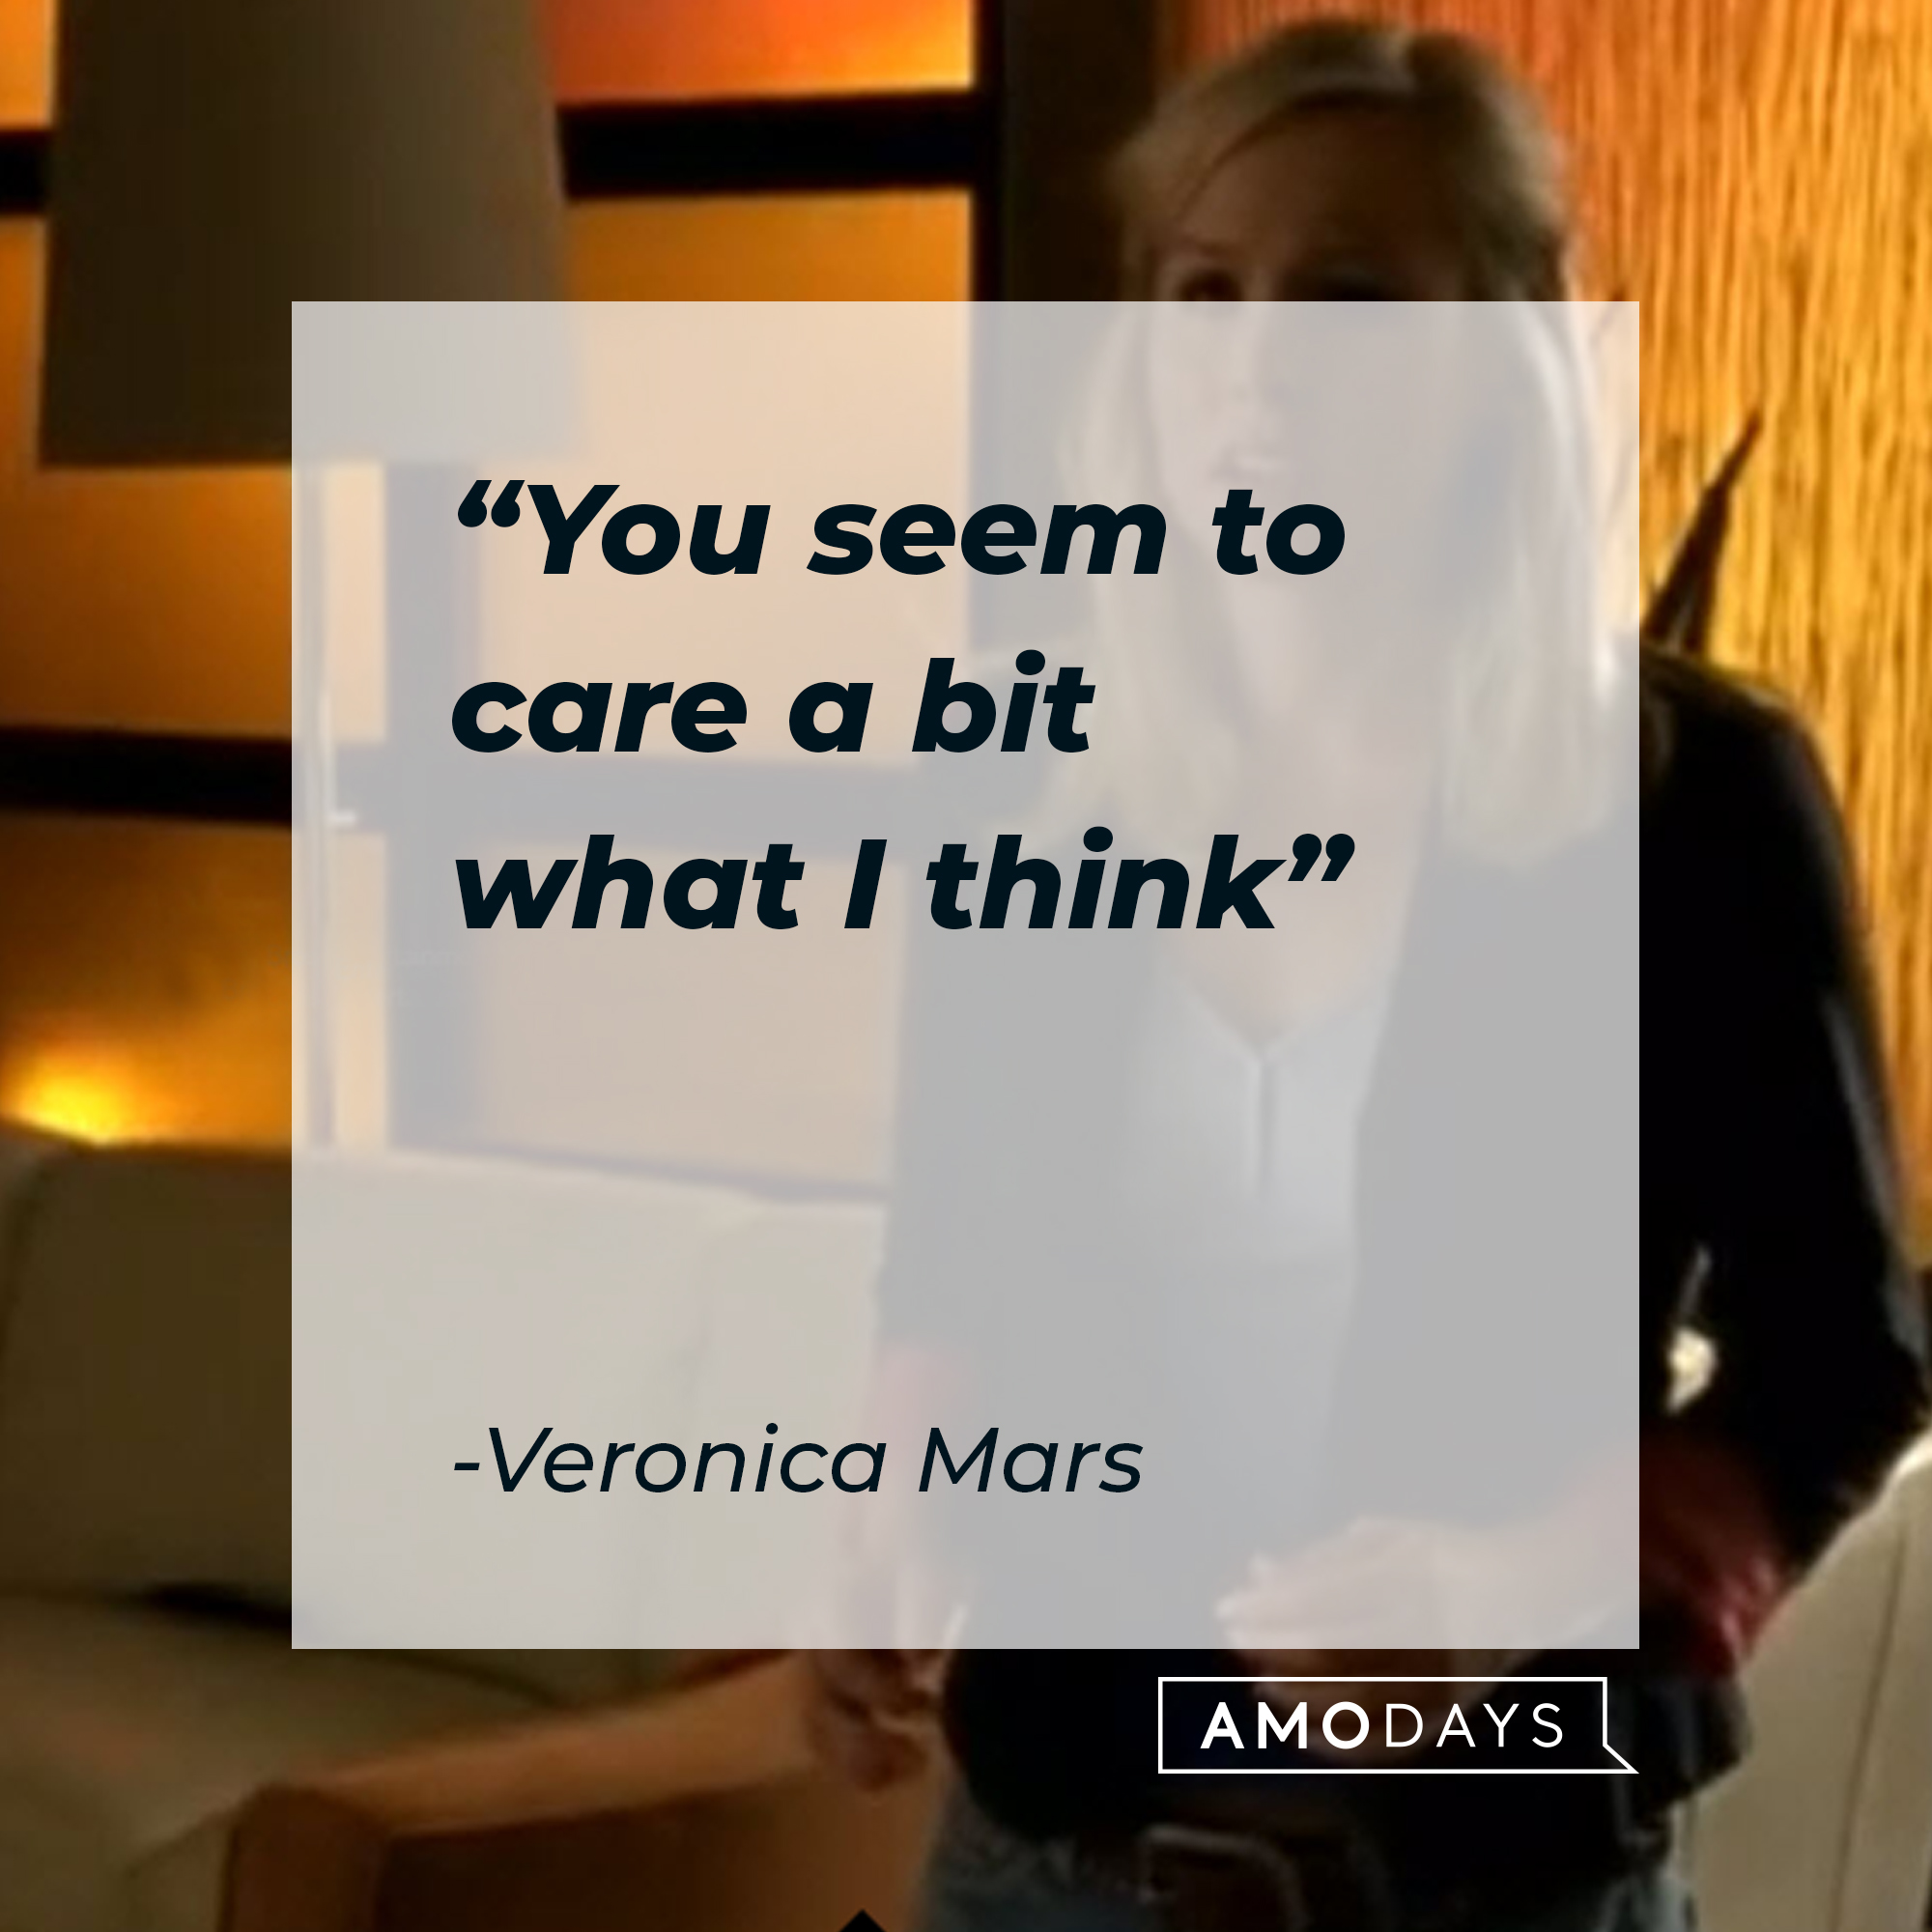 Veronica Mars' quote: "You seem to care a bit what I think" | Source: facebook.com/VeronicaMars